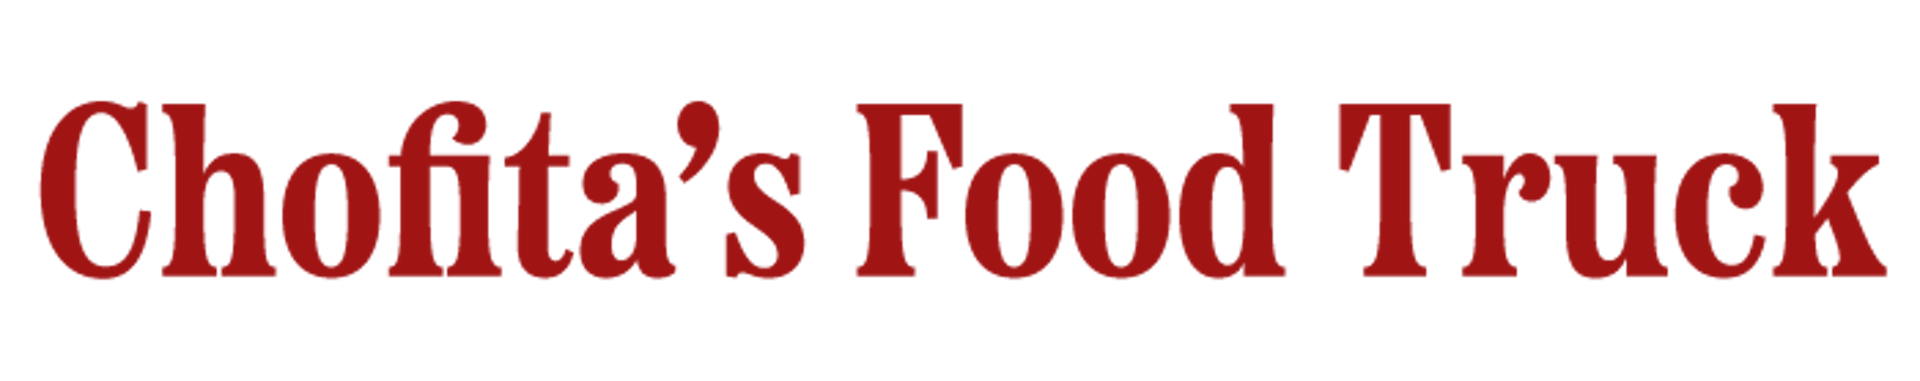 Chofitas Food Truck